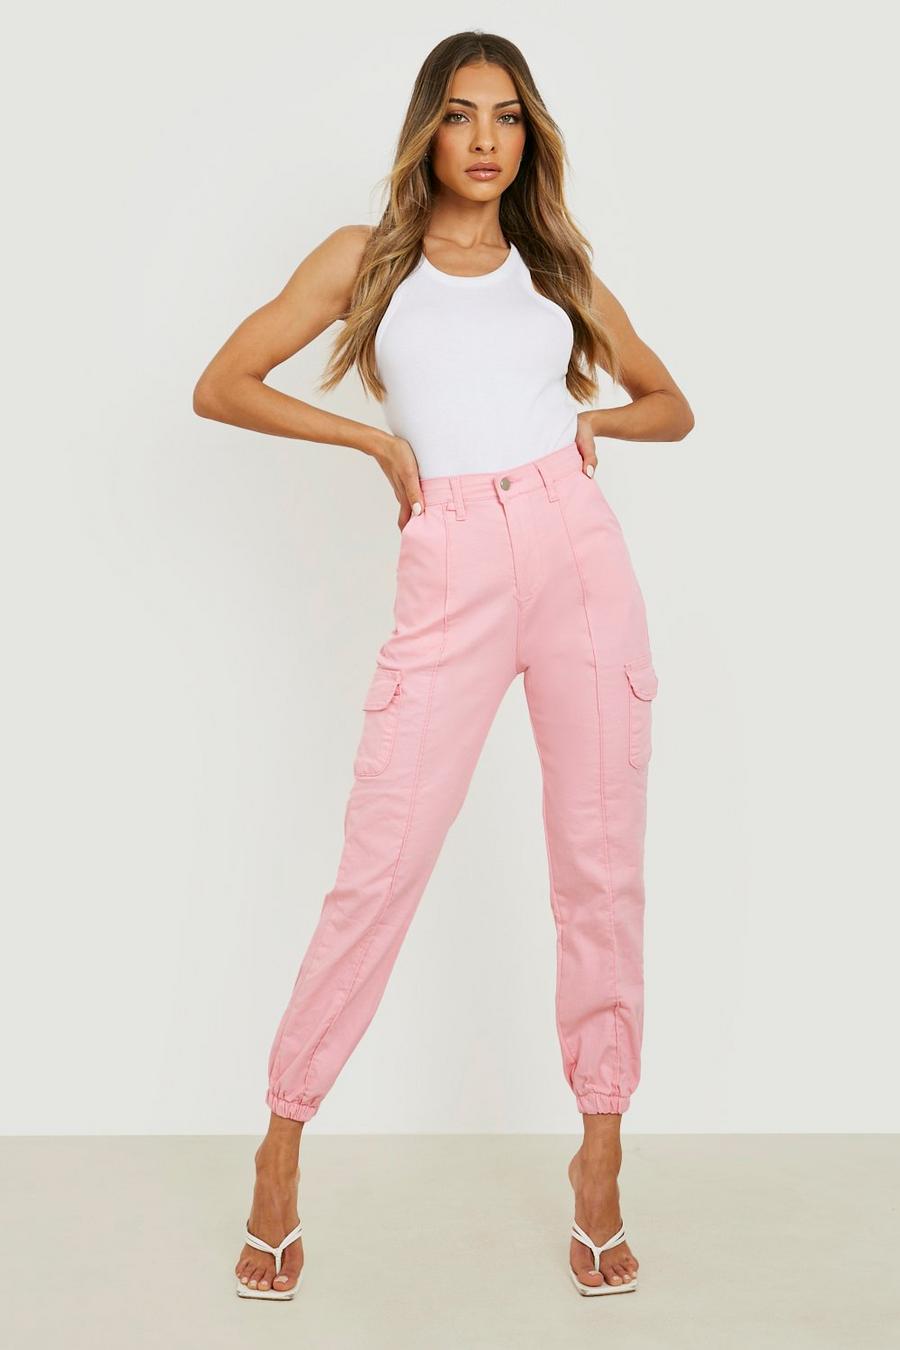 Pantaloni Cargo Casual con tasche laterali, Baby pink rosa